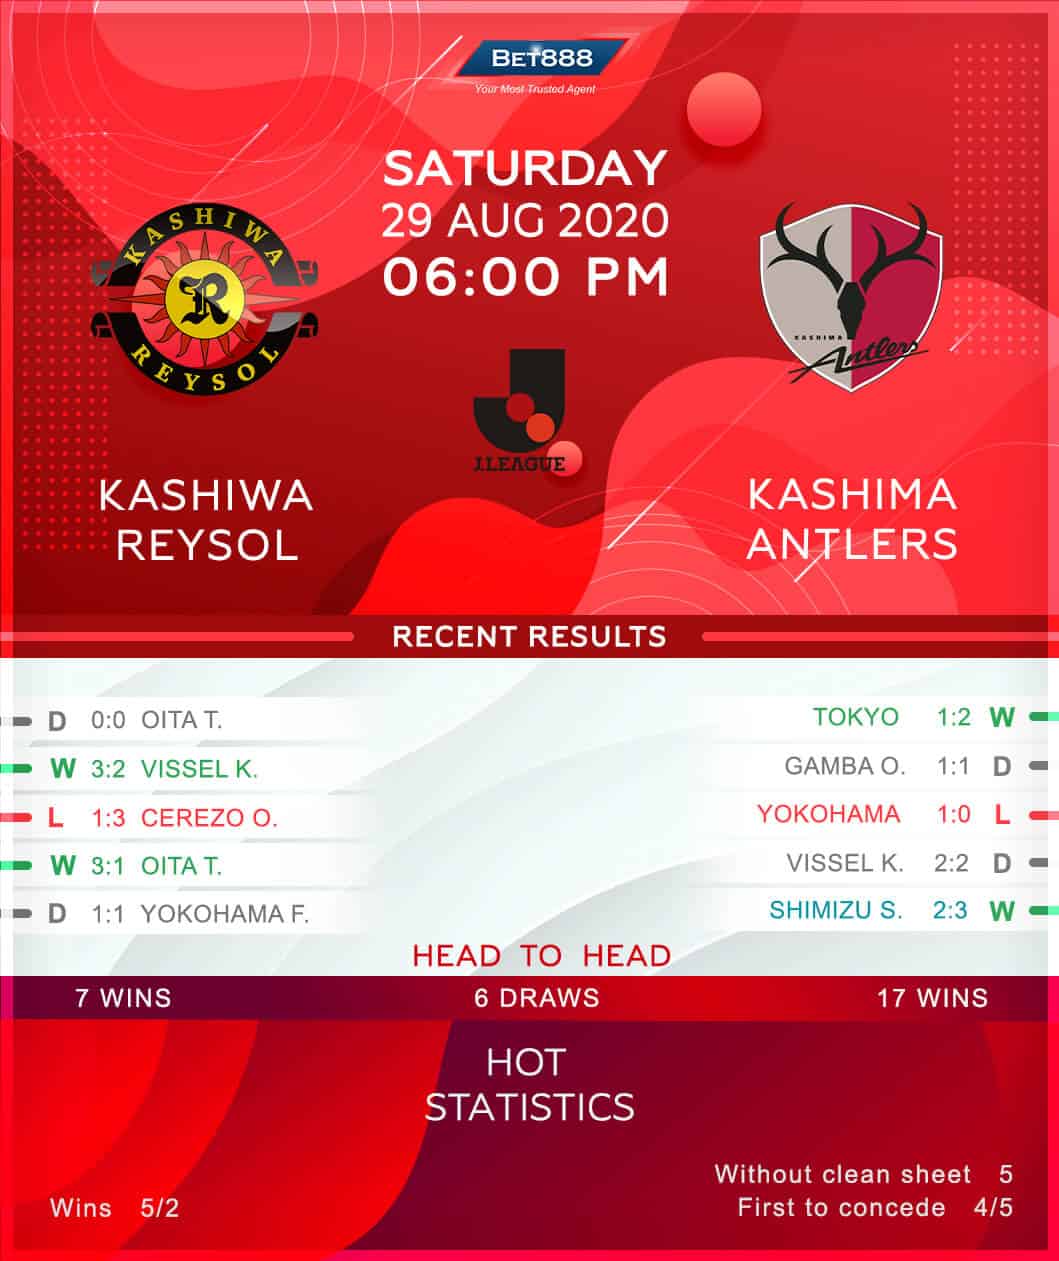 Kashiwa Reysol vs Kashima Antlers 29/08/20